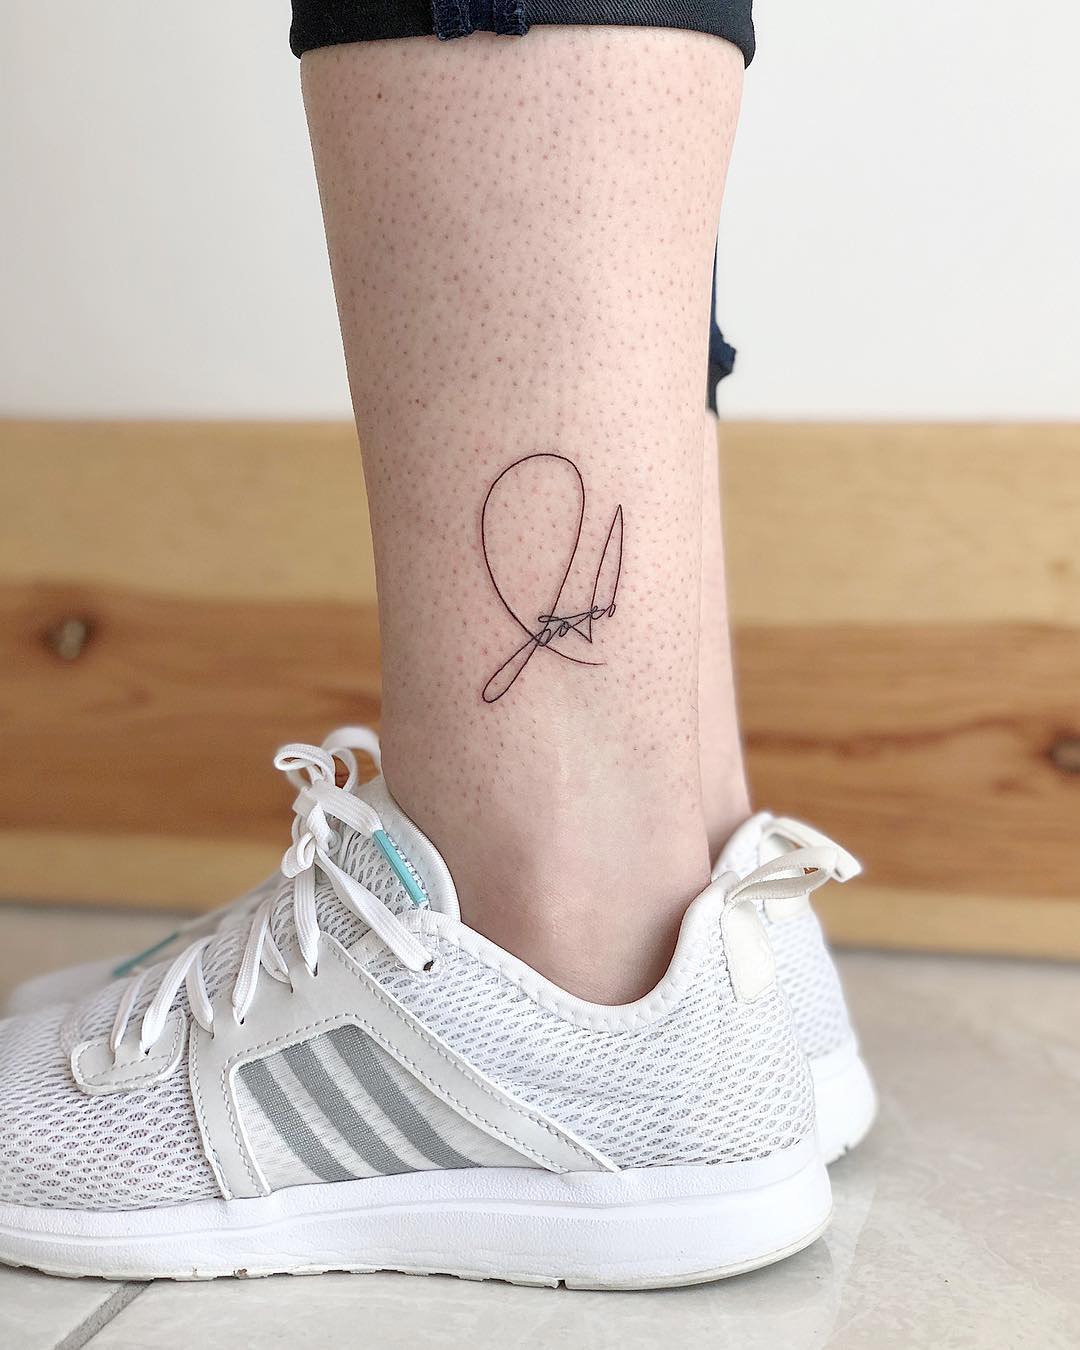 Costco-Obsessed Man Has a Kirkland Signature Tattoo